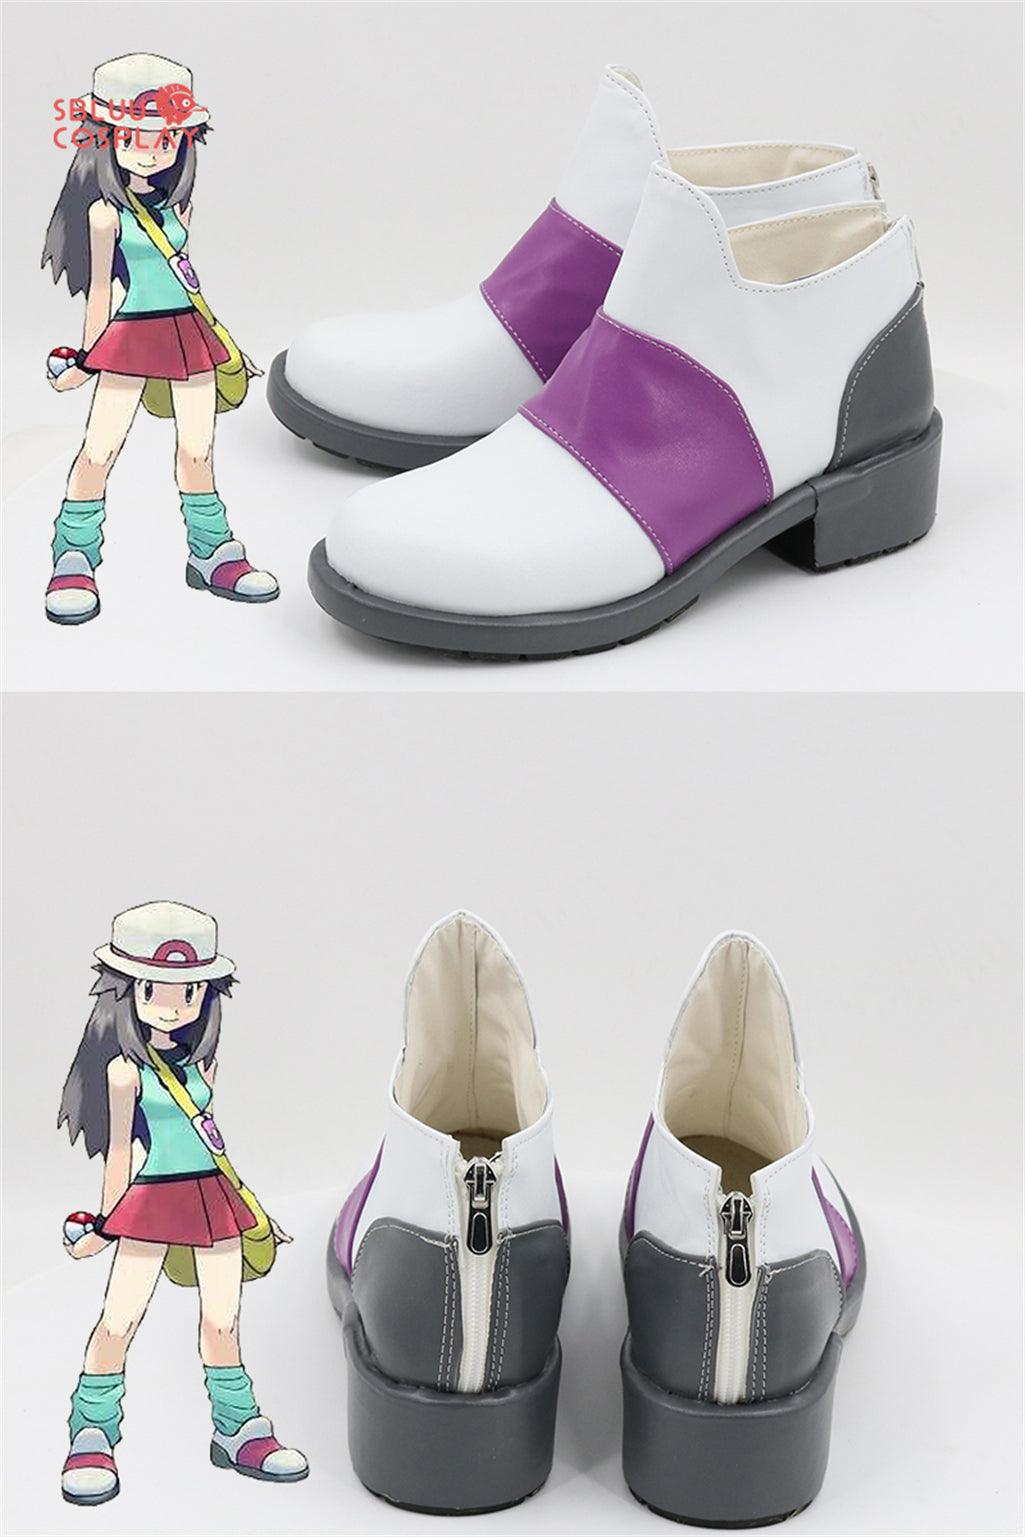 Pokémon Blue Cosplay Shoes Custom Made Boots - SBluuCosplay